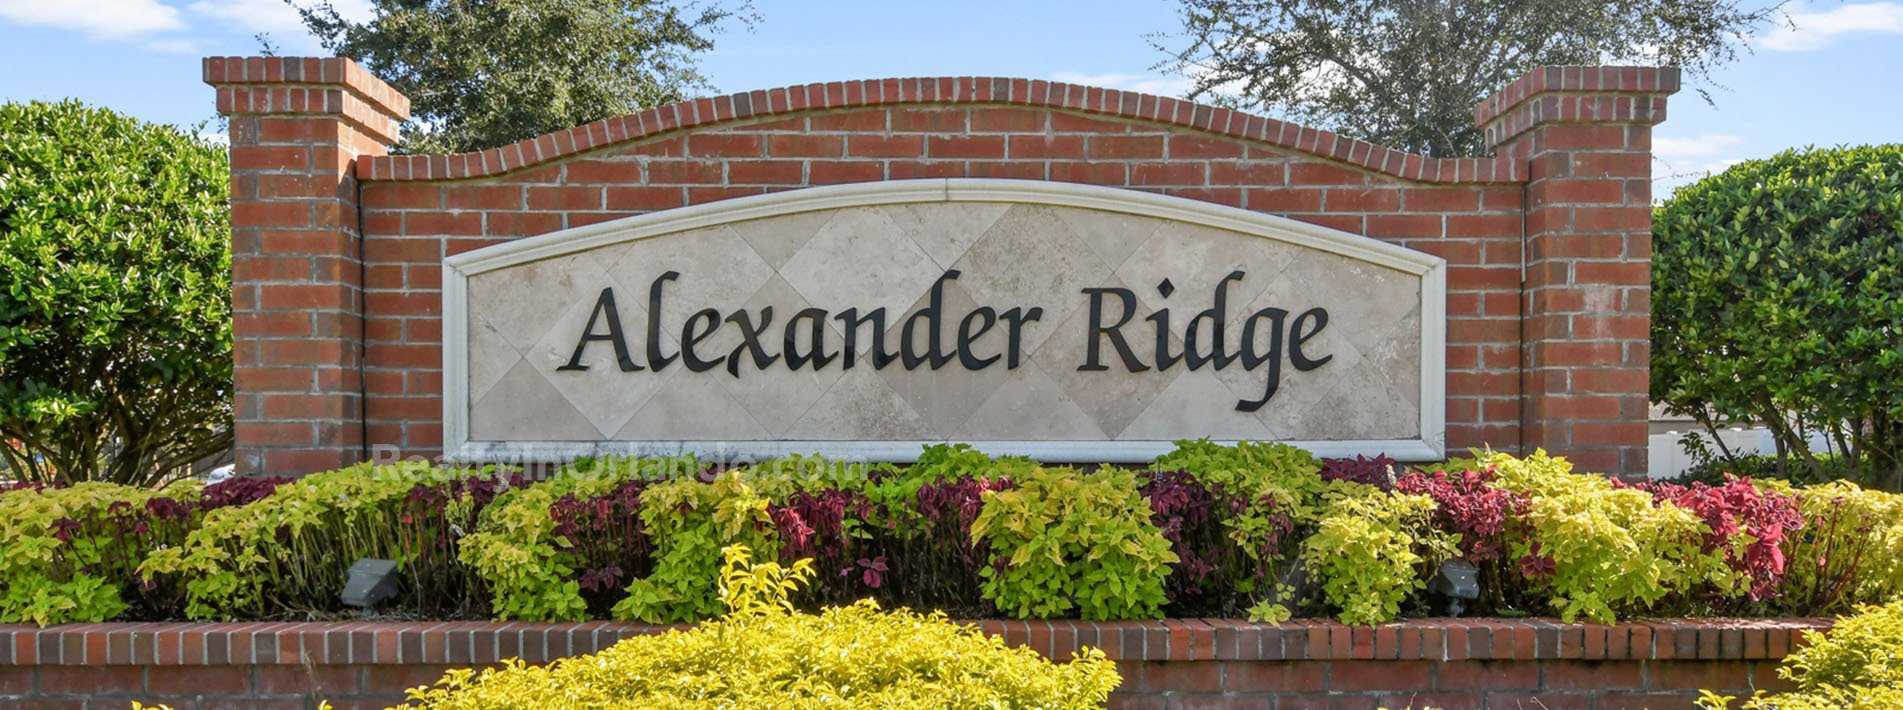 Alexander Ridge Winter Garden